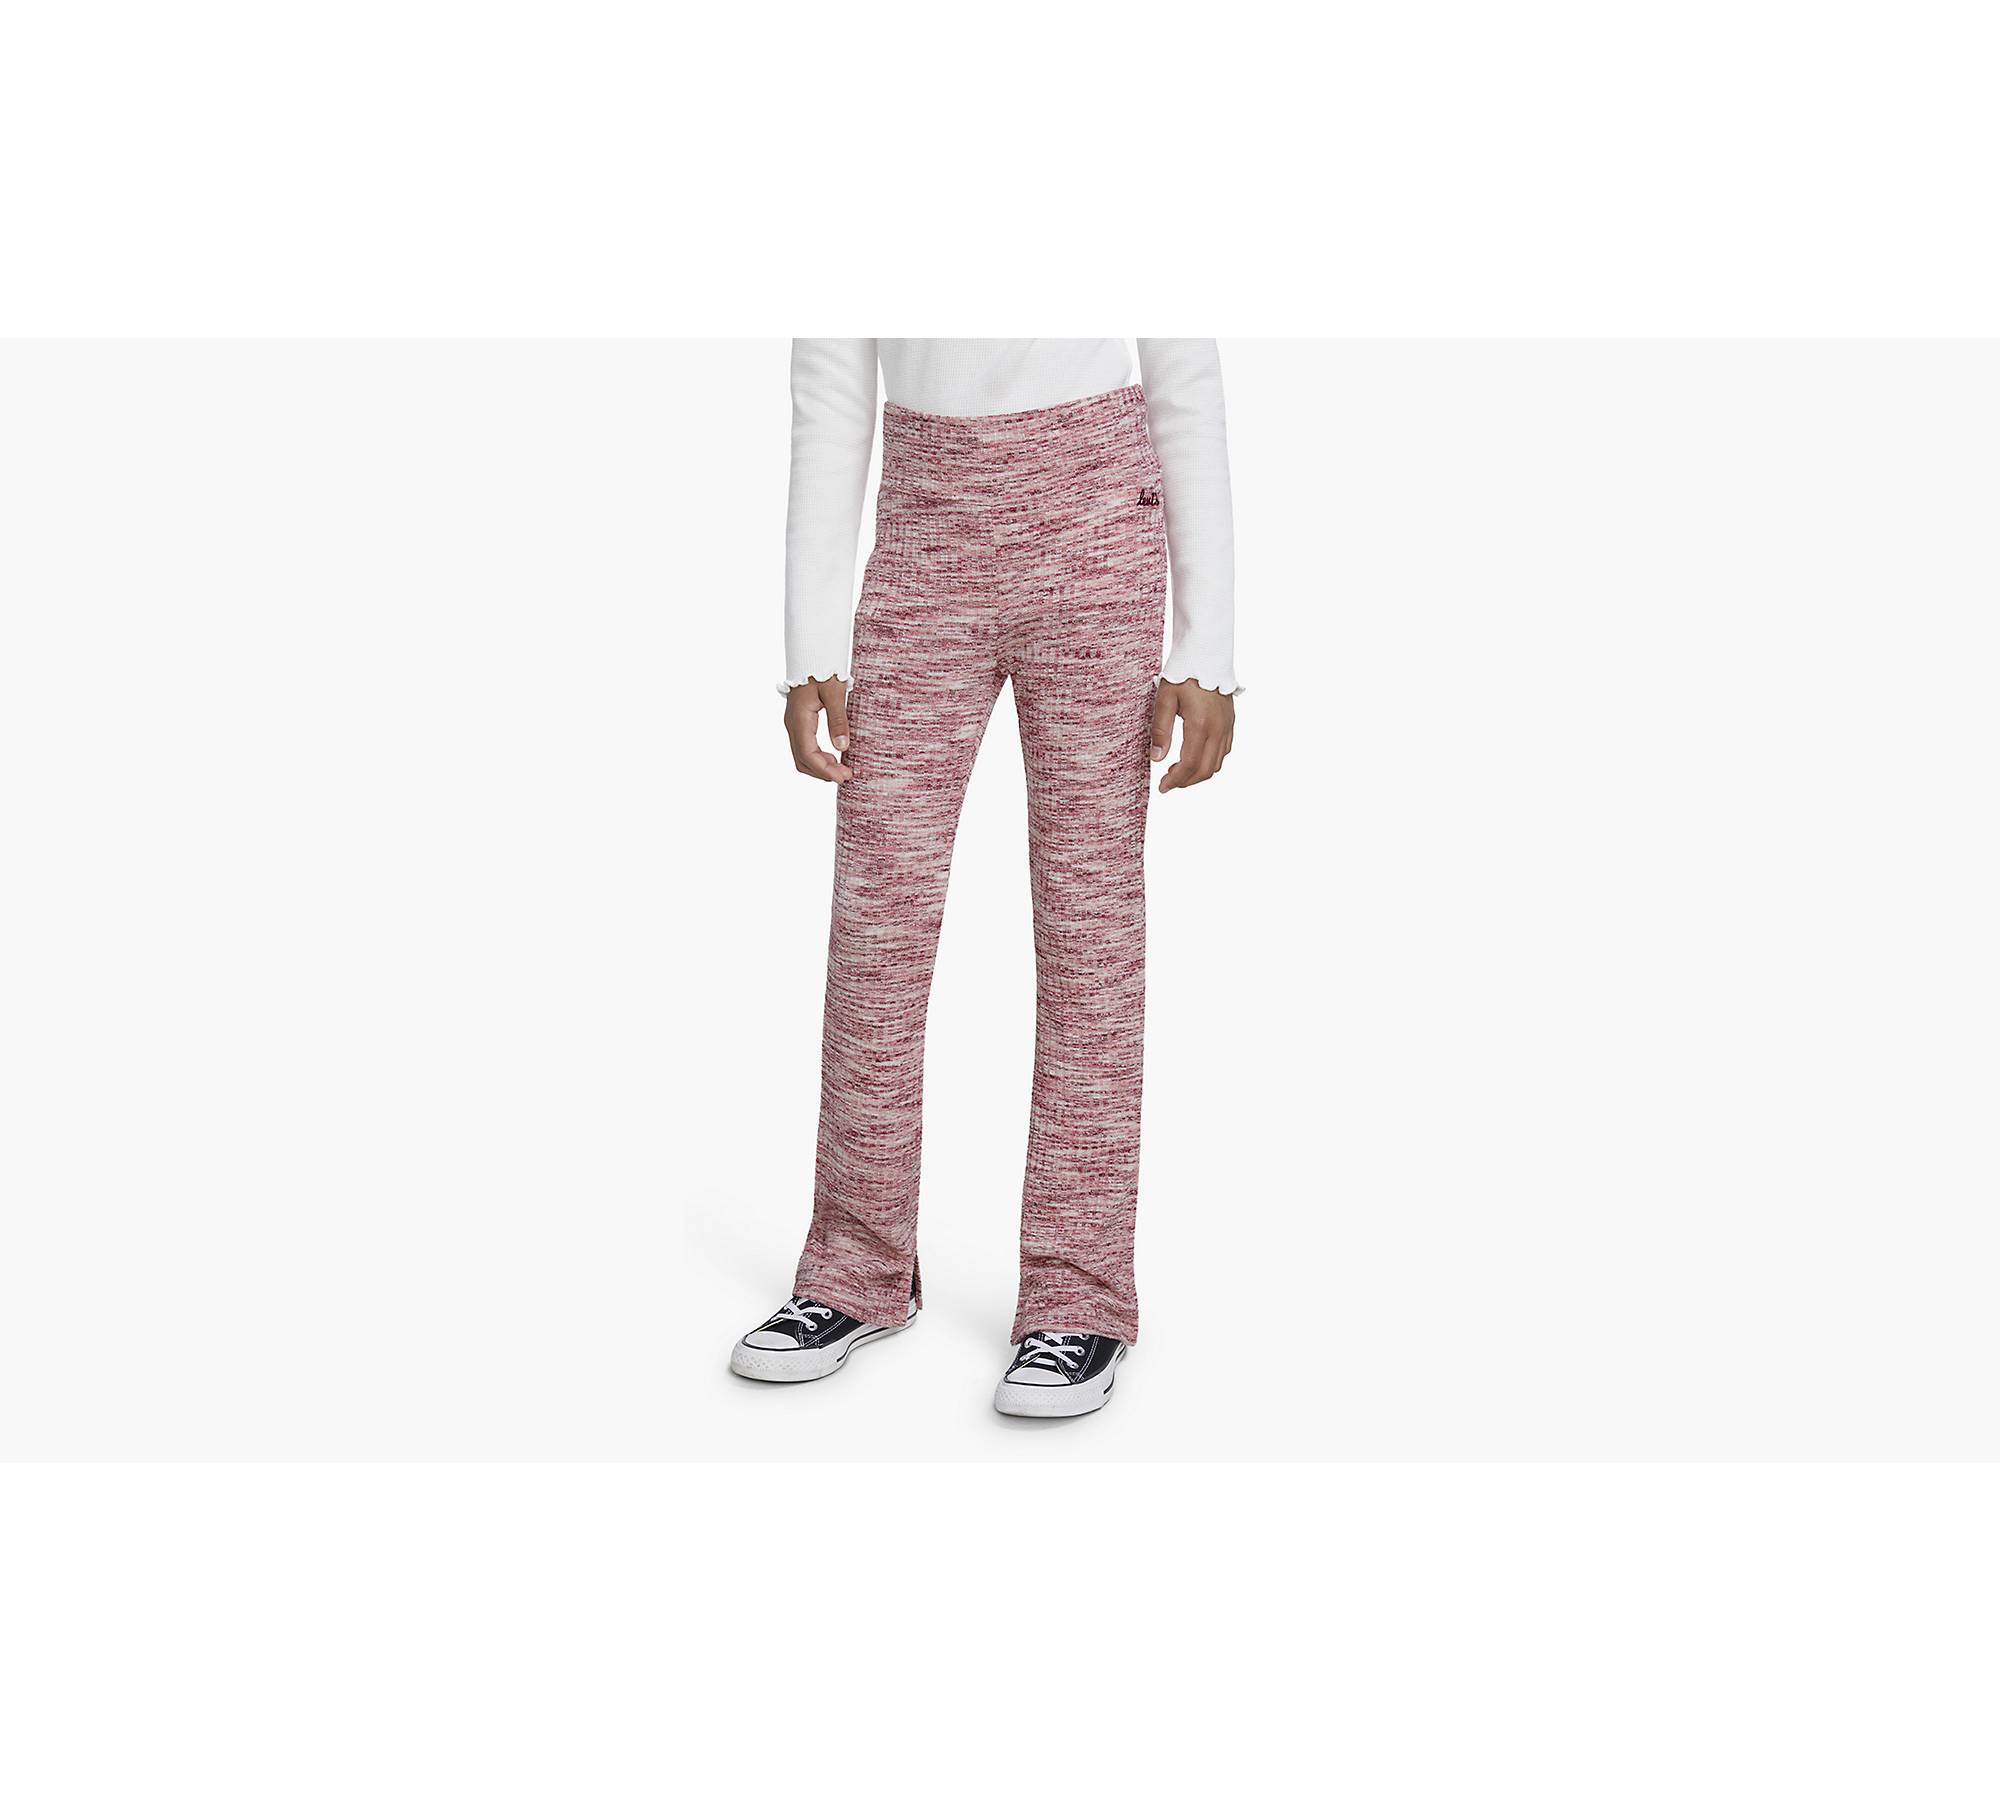  Women's Pants Pants for Women Space Dye Flare Leg Pants (Color  : Khaki, Size : Small) : Clothing, Shoes & Jewelry